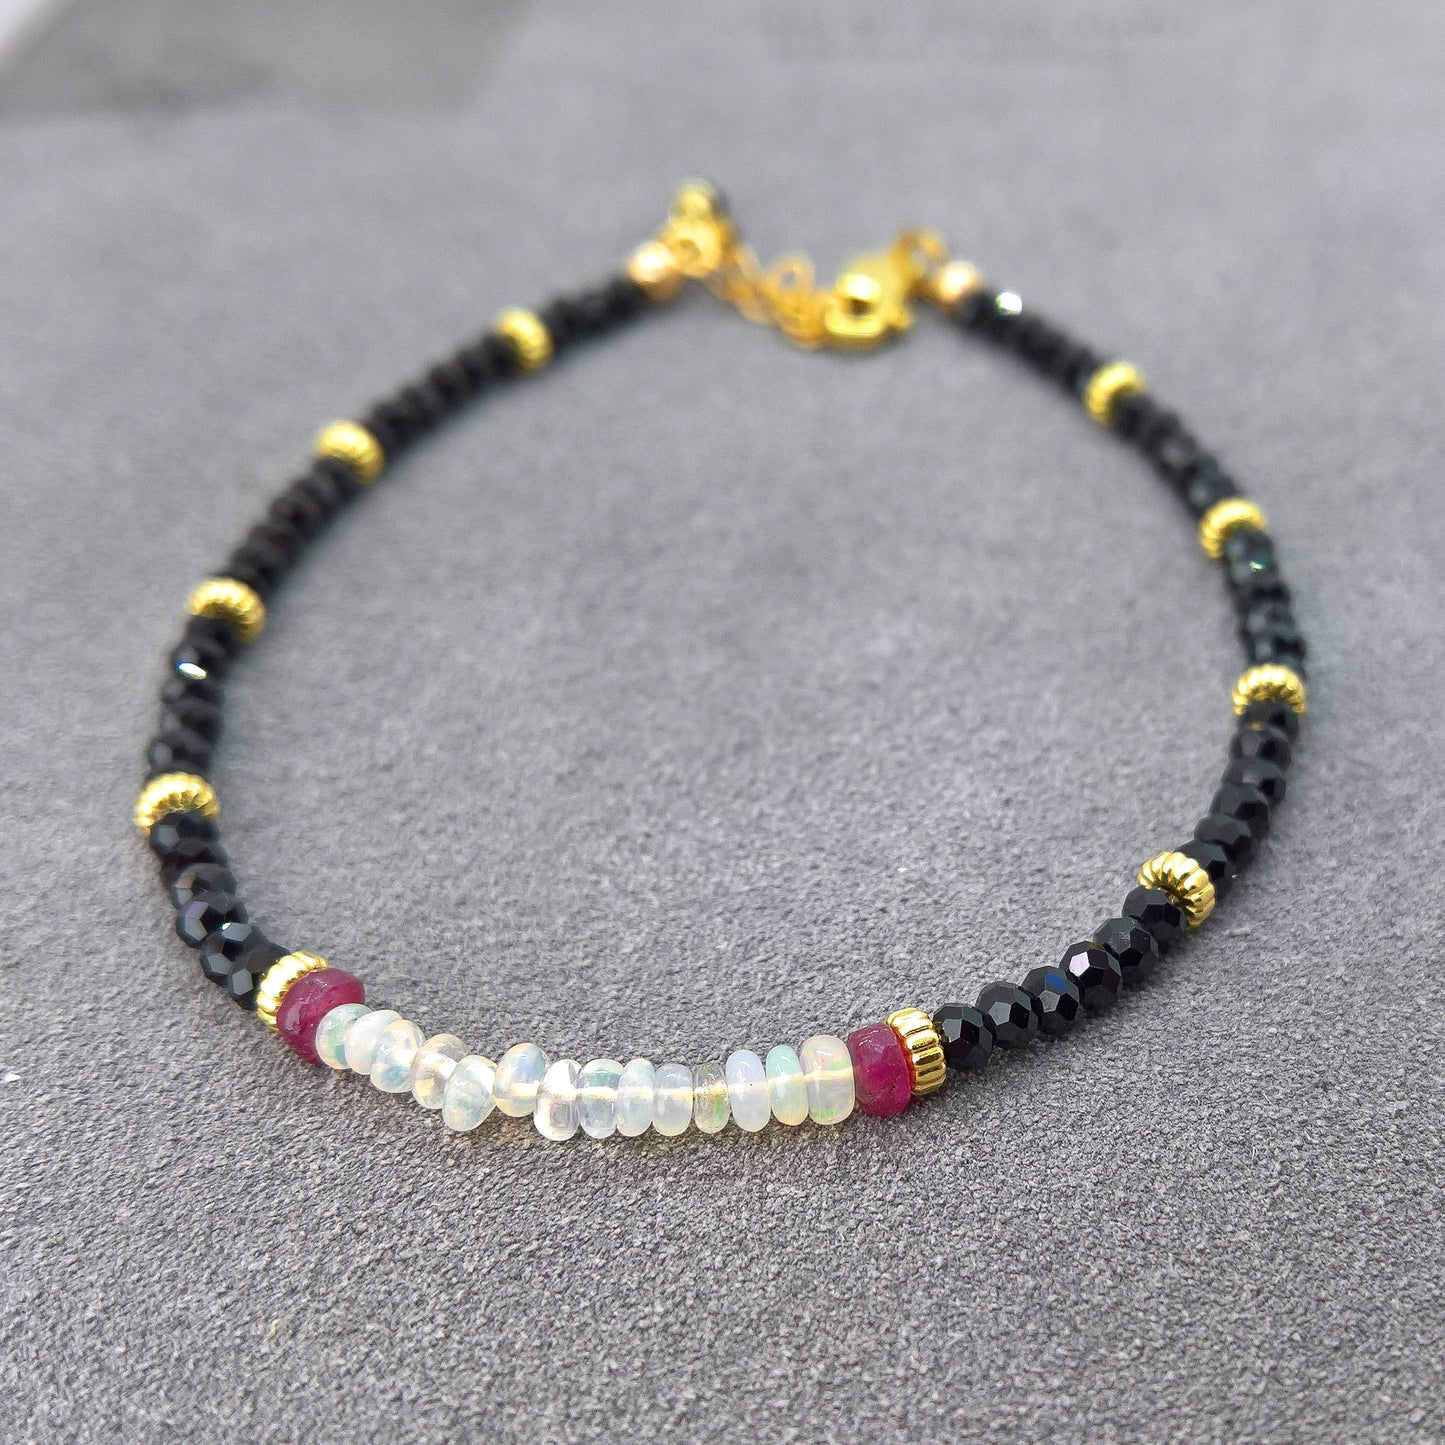 Black Spinel and opal adjustable bracelet - dainty skinny bracelet